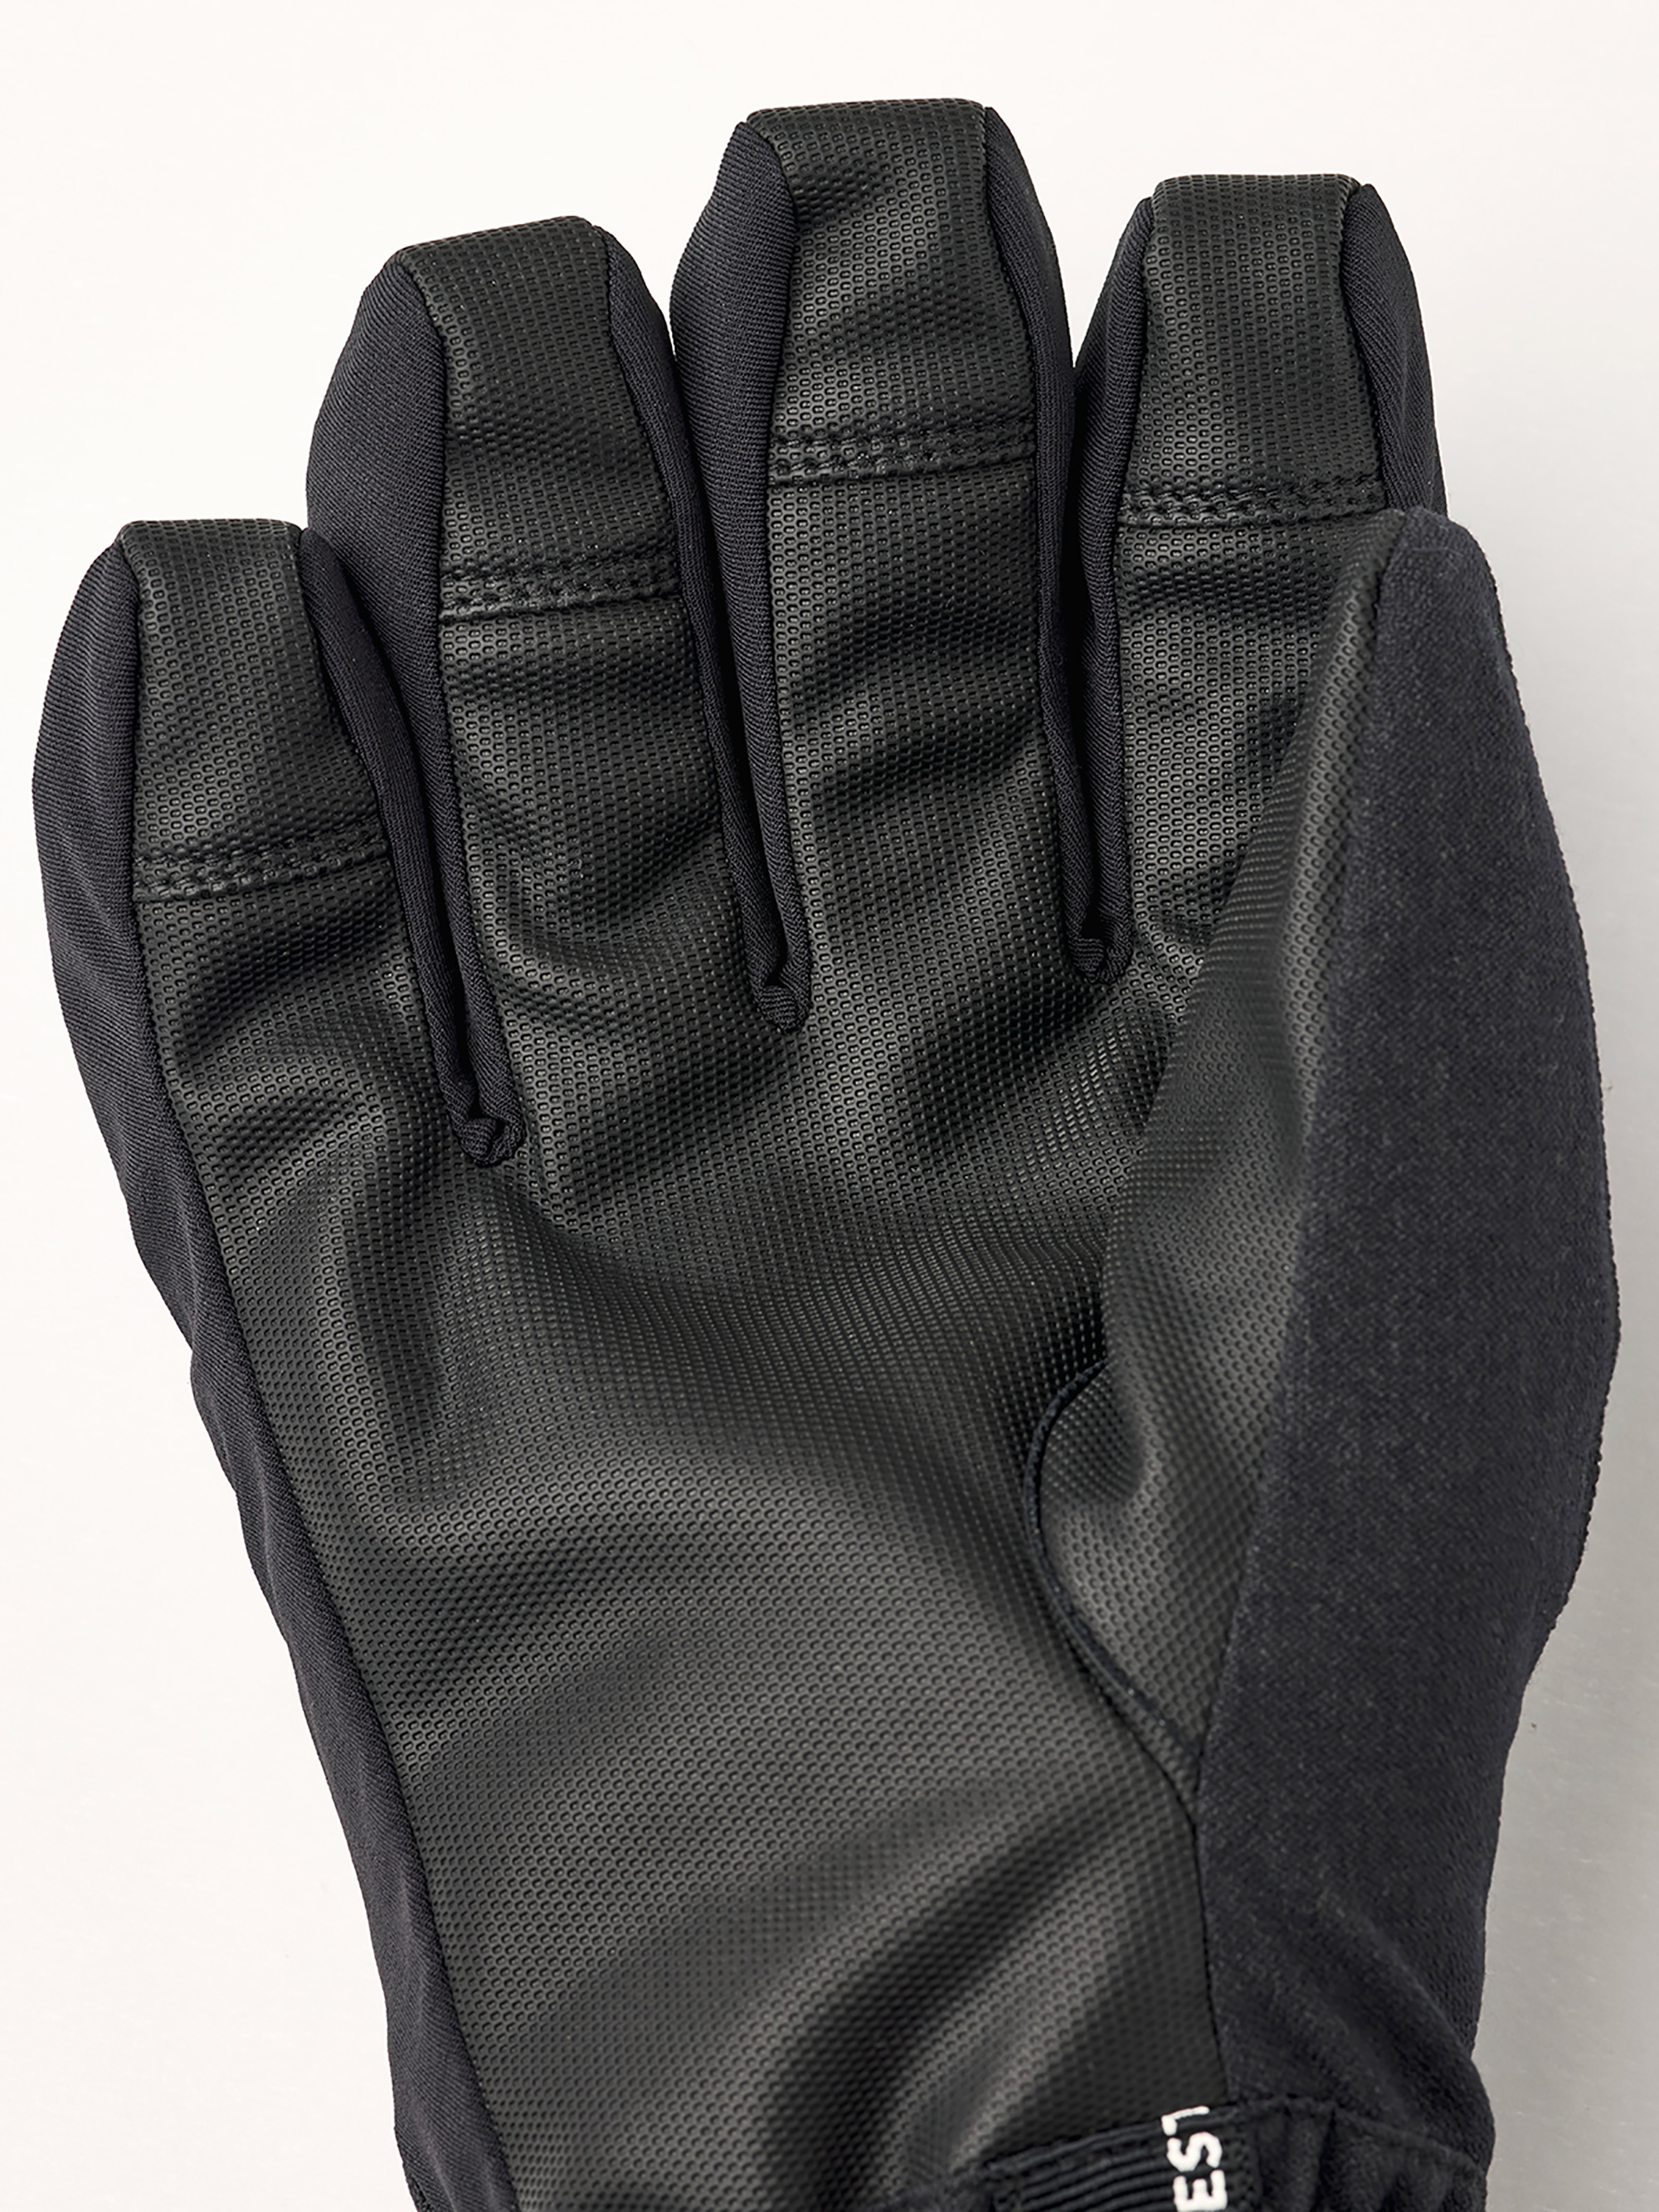 Women's Gloves | UK Stock, Shipped from Cornwall - SkiGloveShop